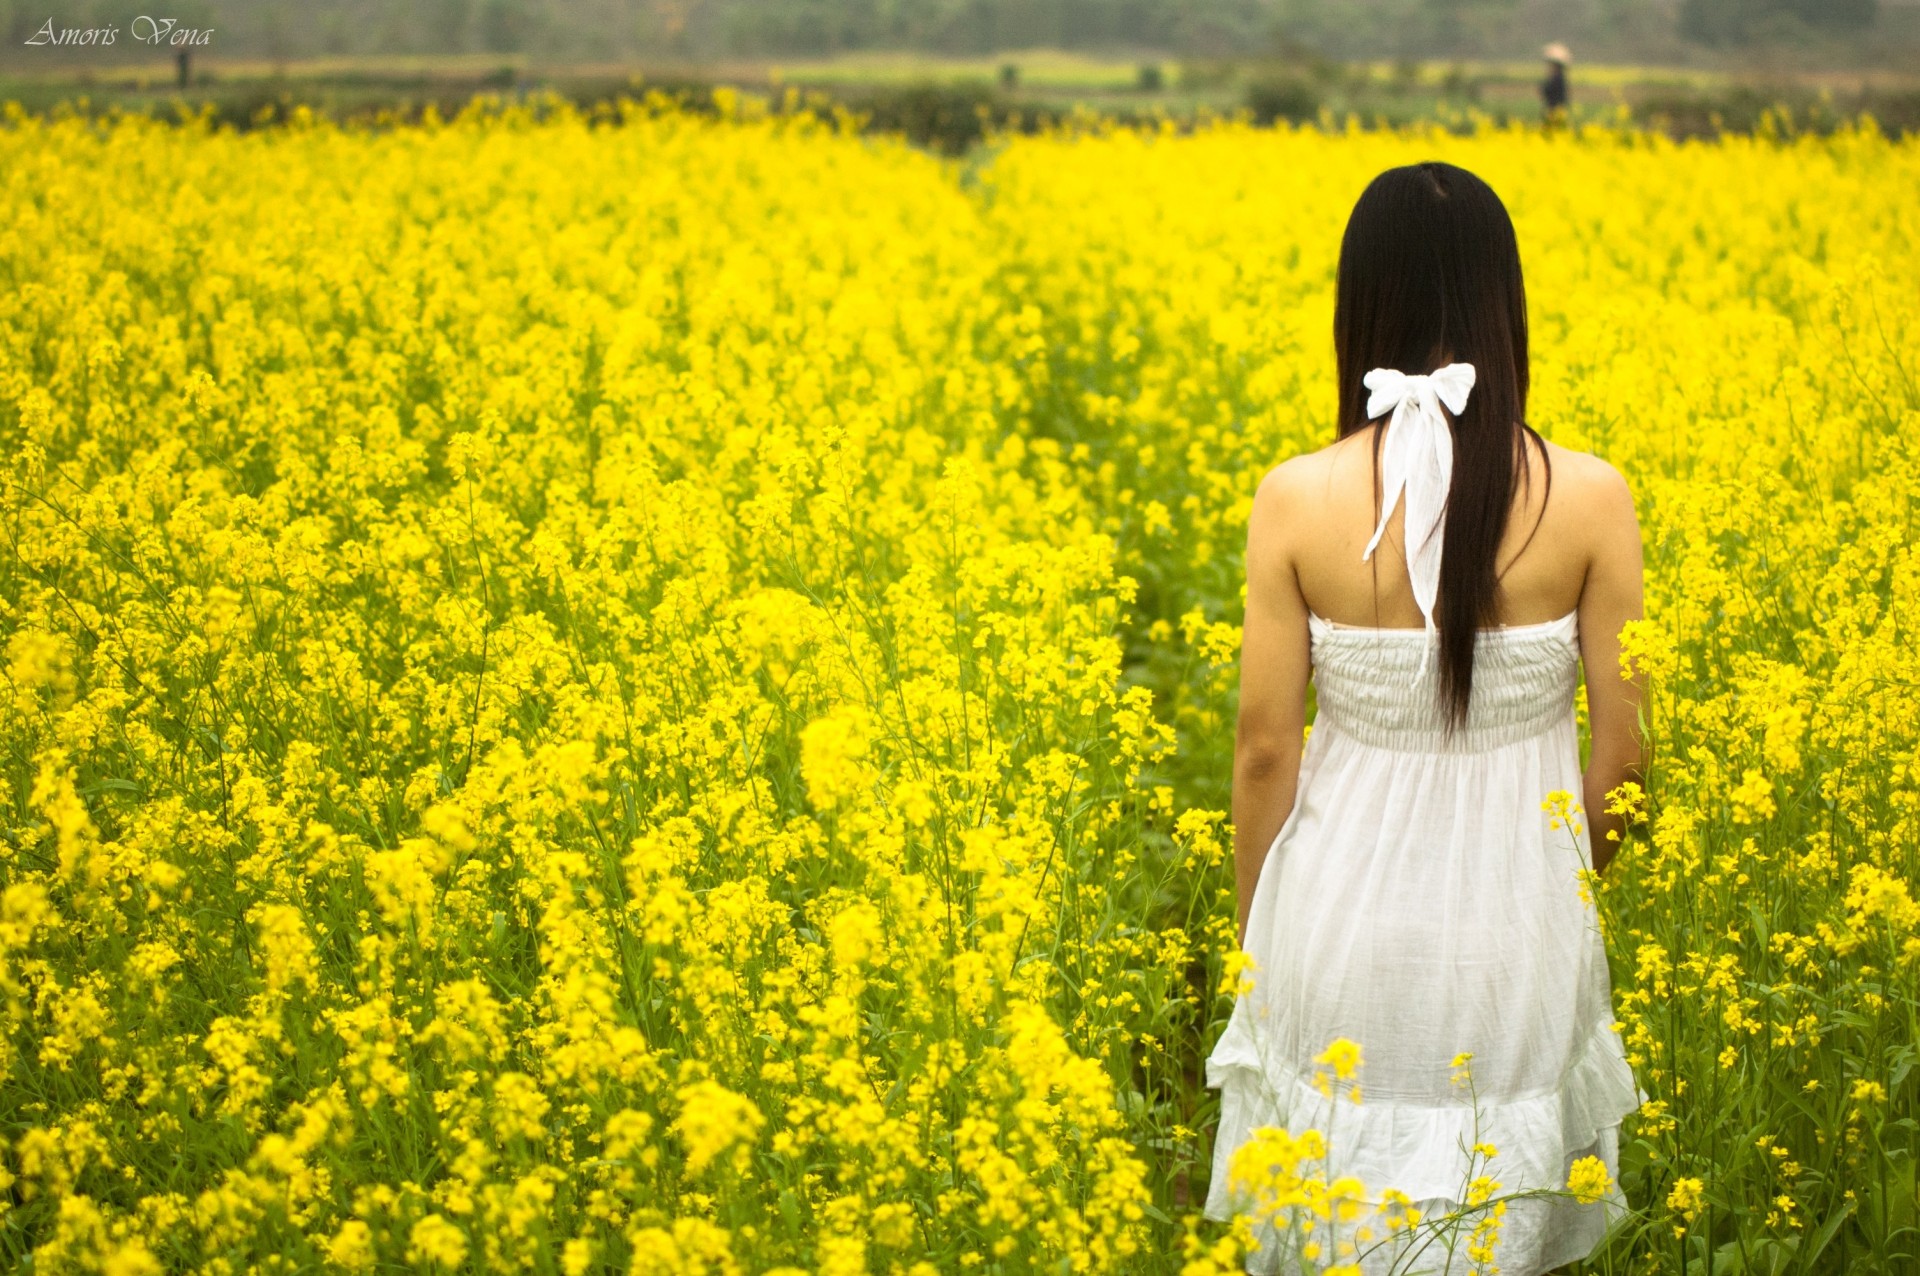 flores pantalla completa pantalla ancha amarillo fondo blanco chica estado de ánimo papel pintado vestir toscana verano sol flor morena campo